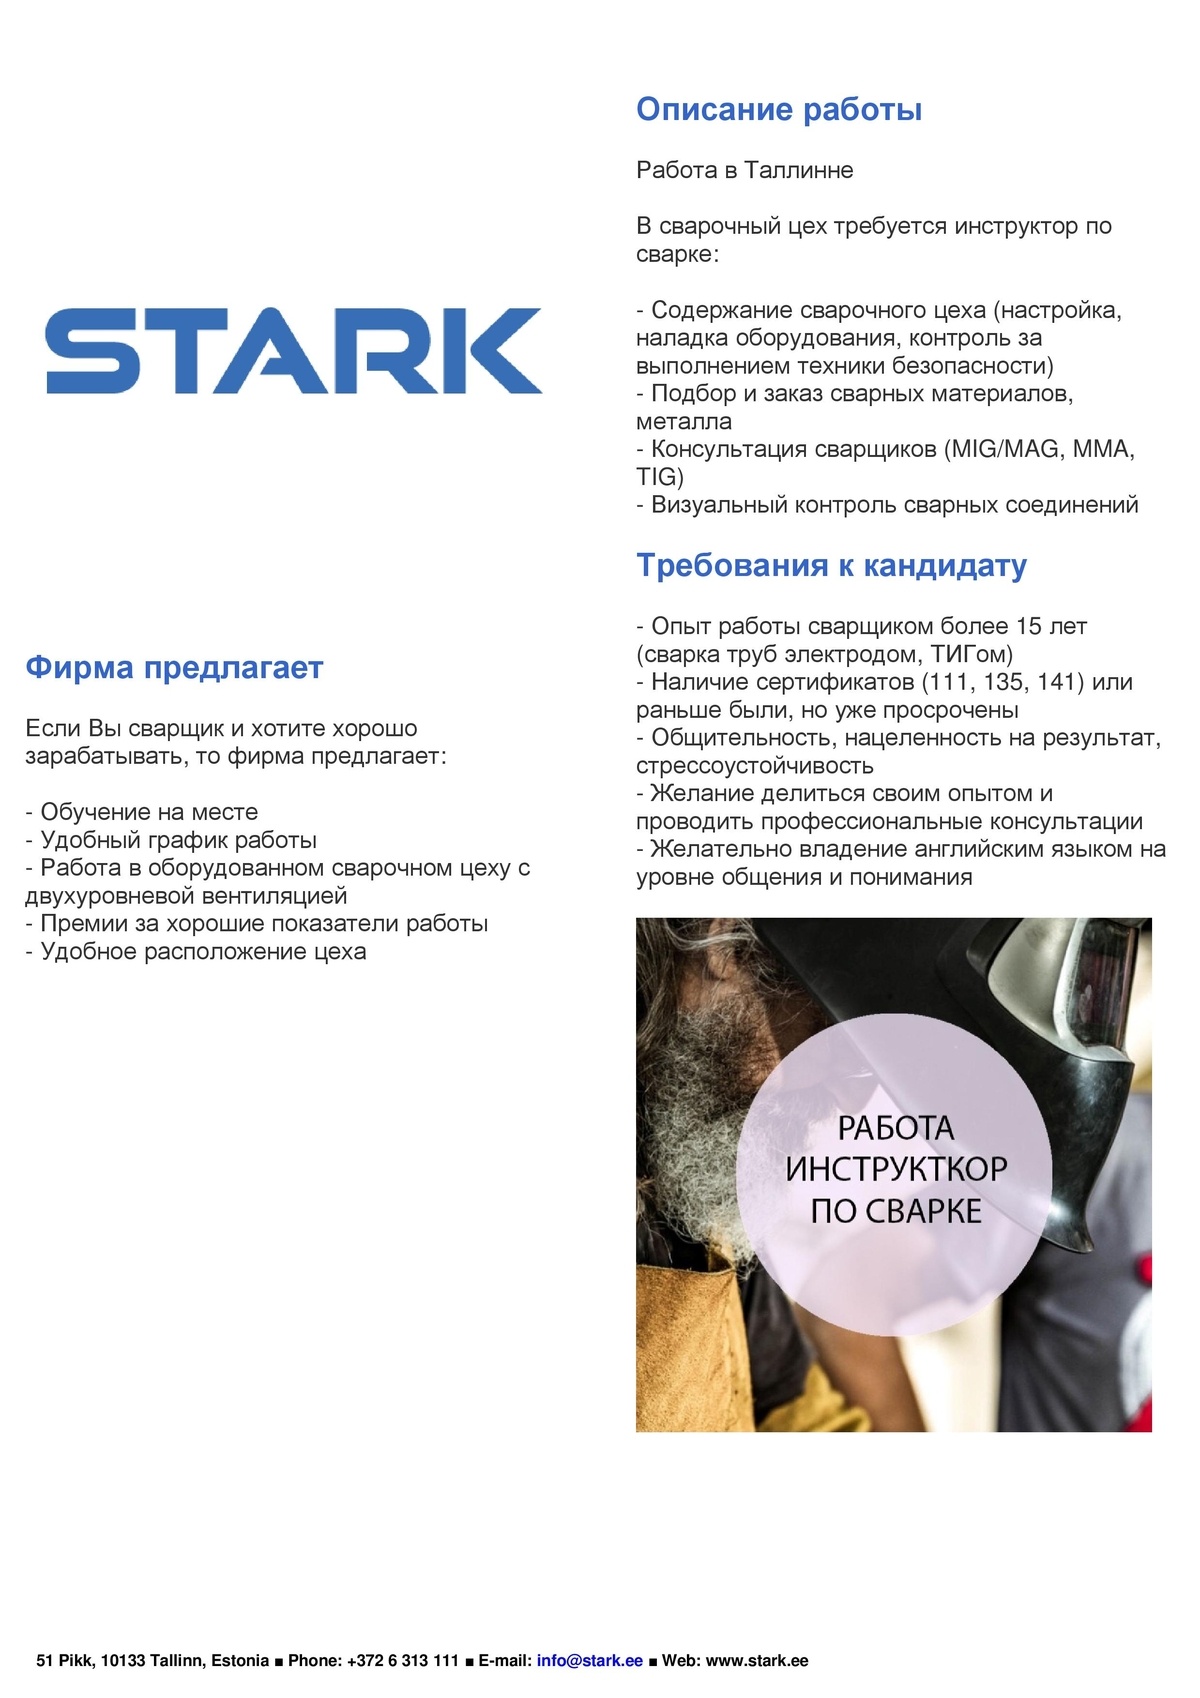 STARK STANDARD OÜ Инструктор  по сварке